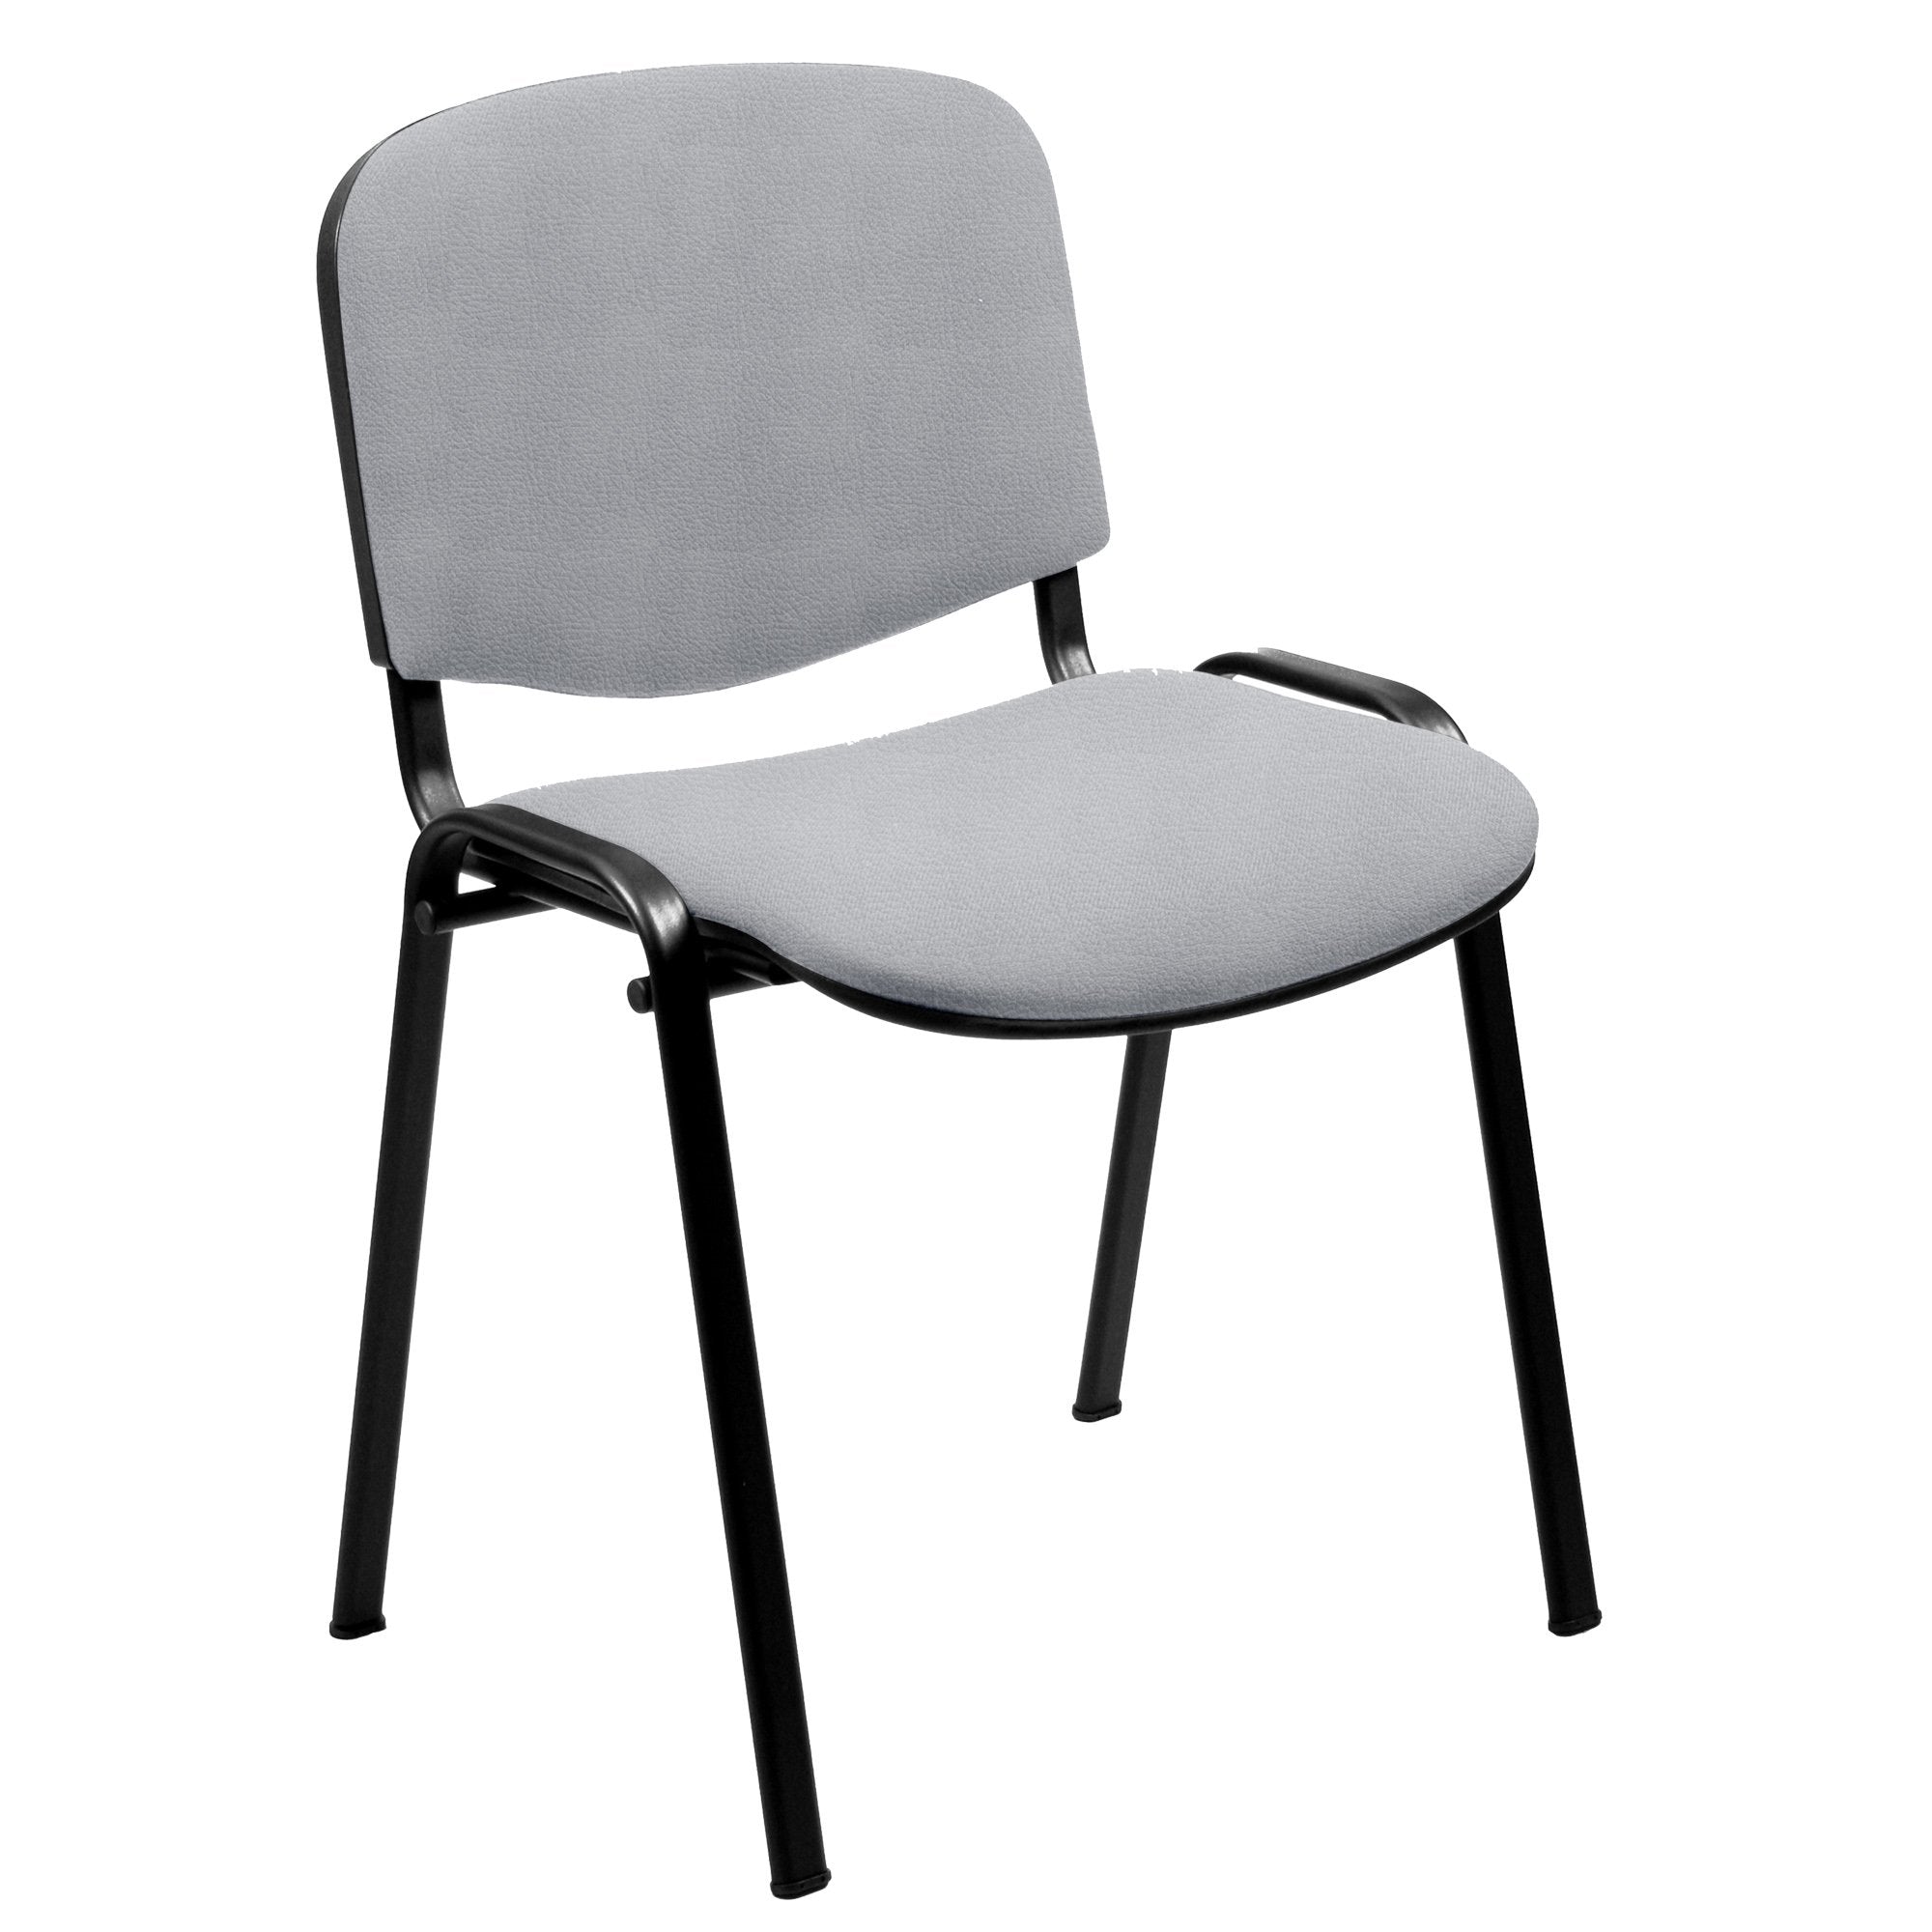 unisit-sedia-attesa-dado-d5s-pt-vera-pelle-top-grigio-chiaro-senza-braccioli